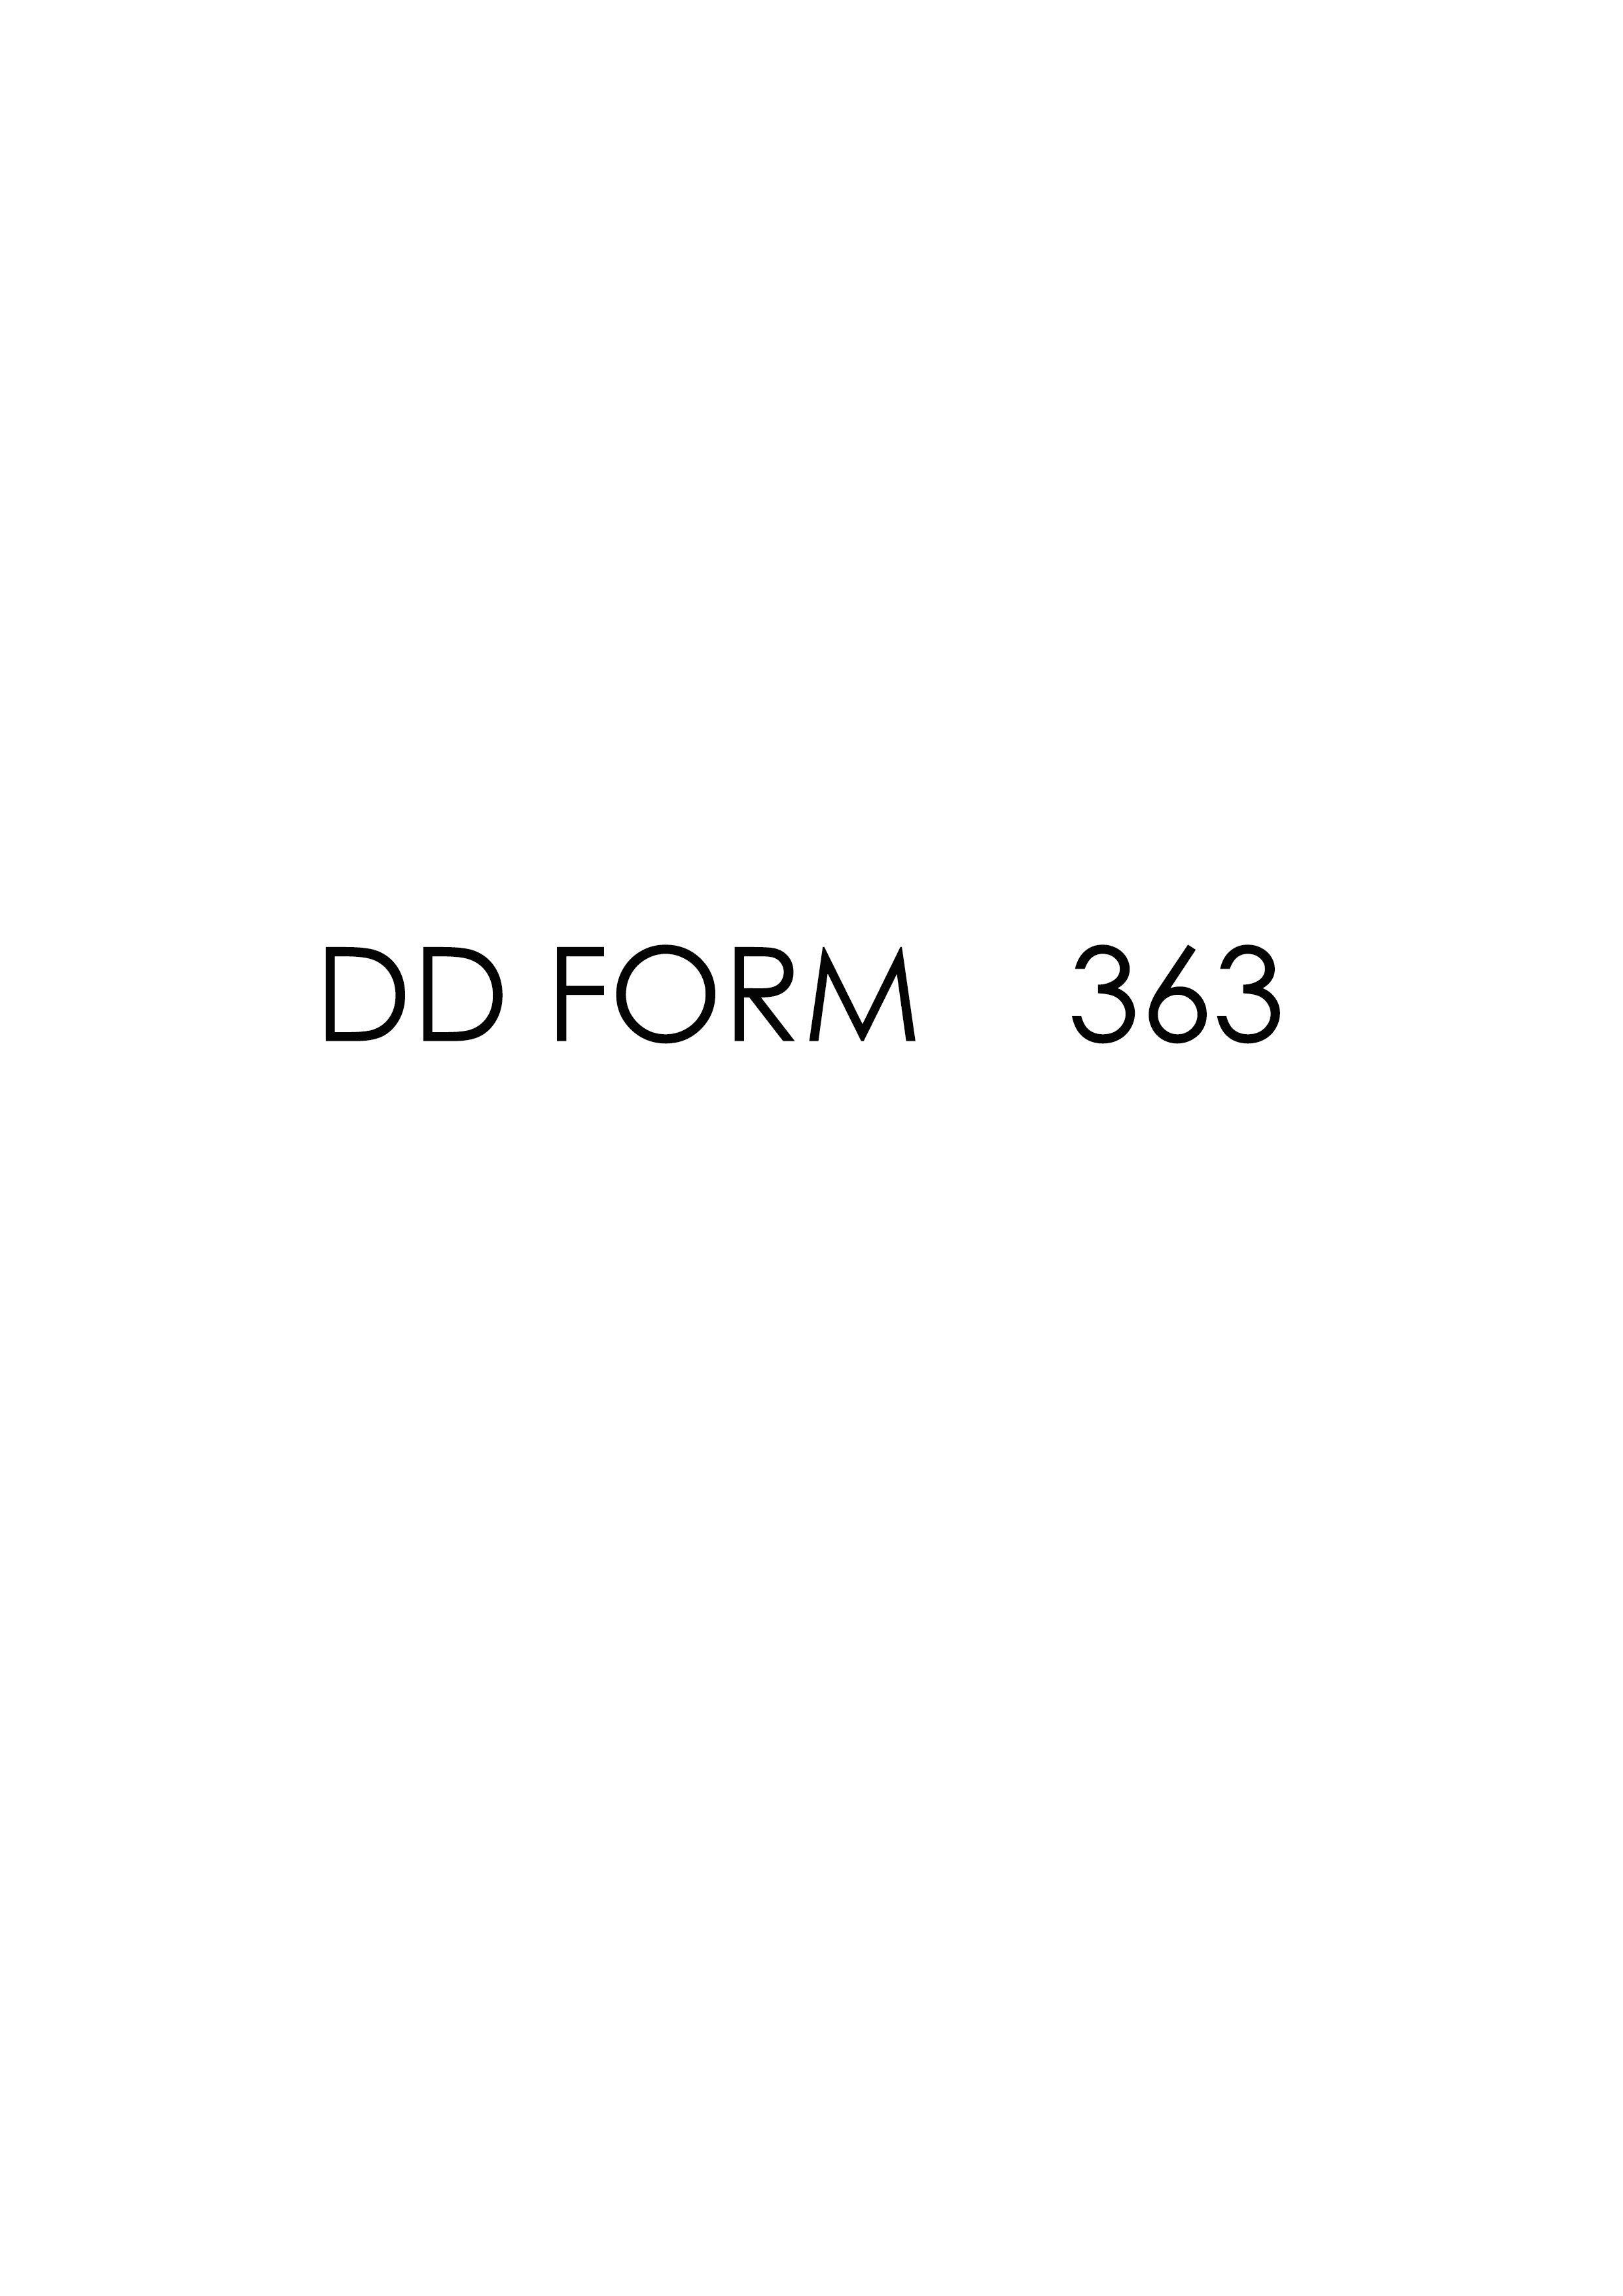 Download dd 363 Form